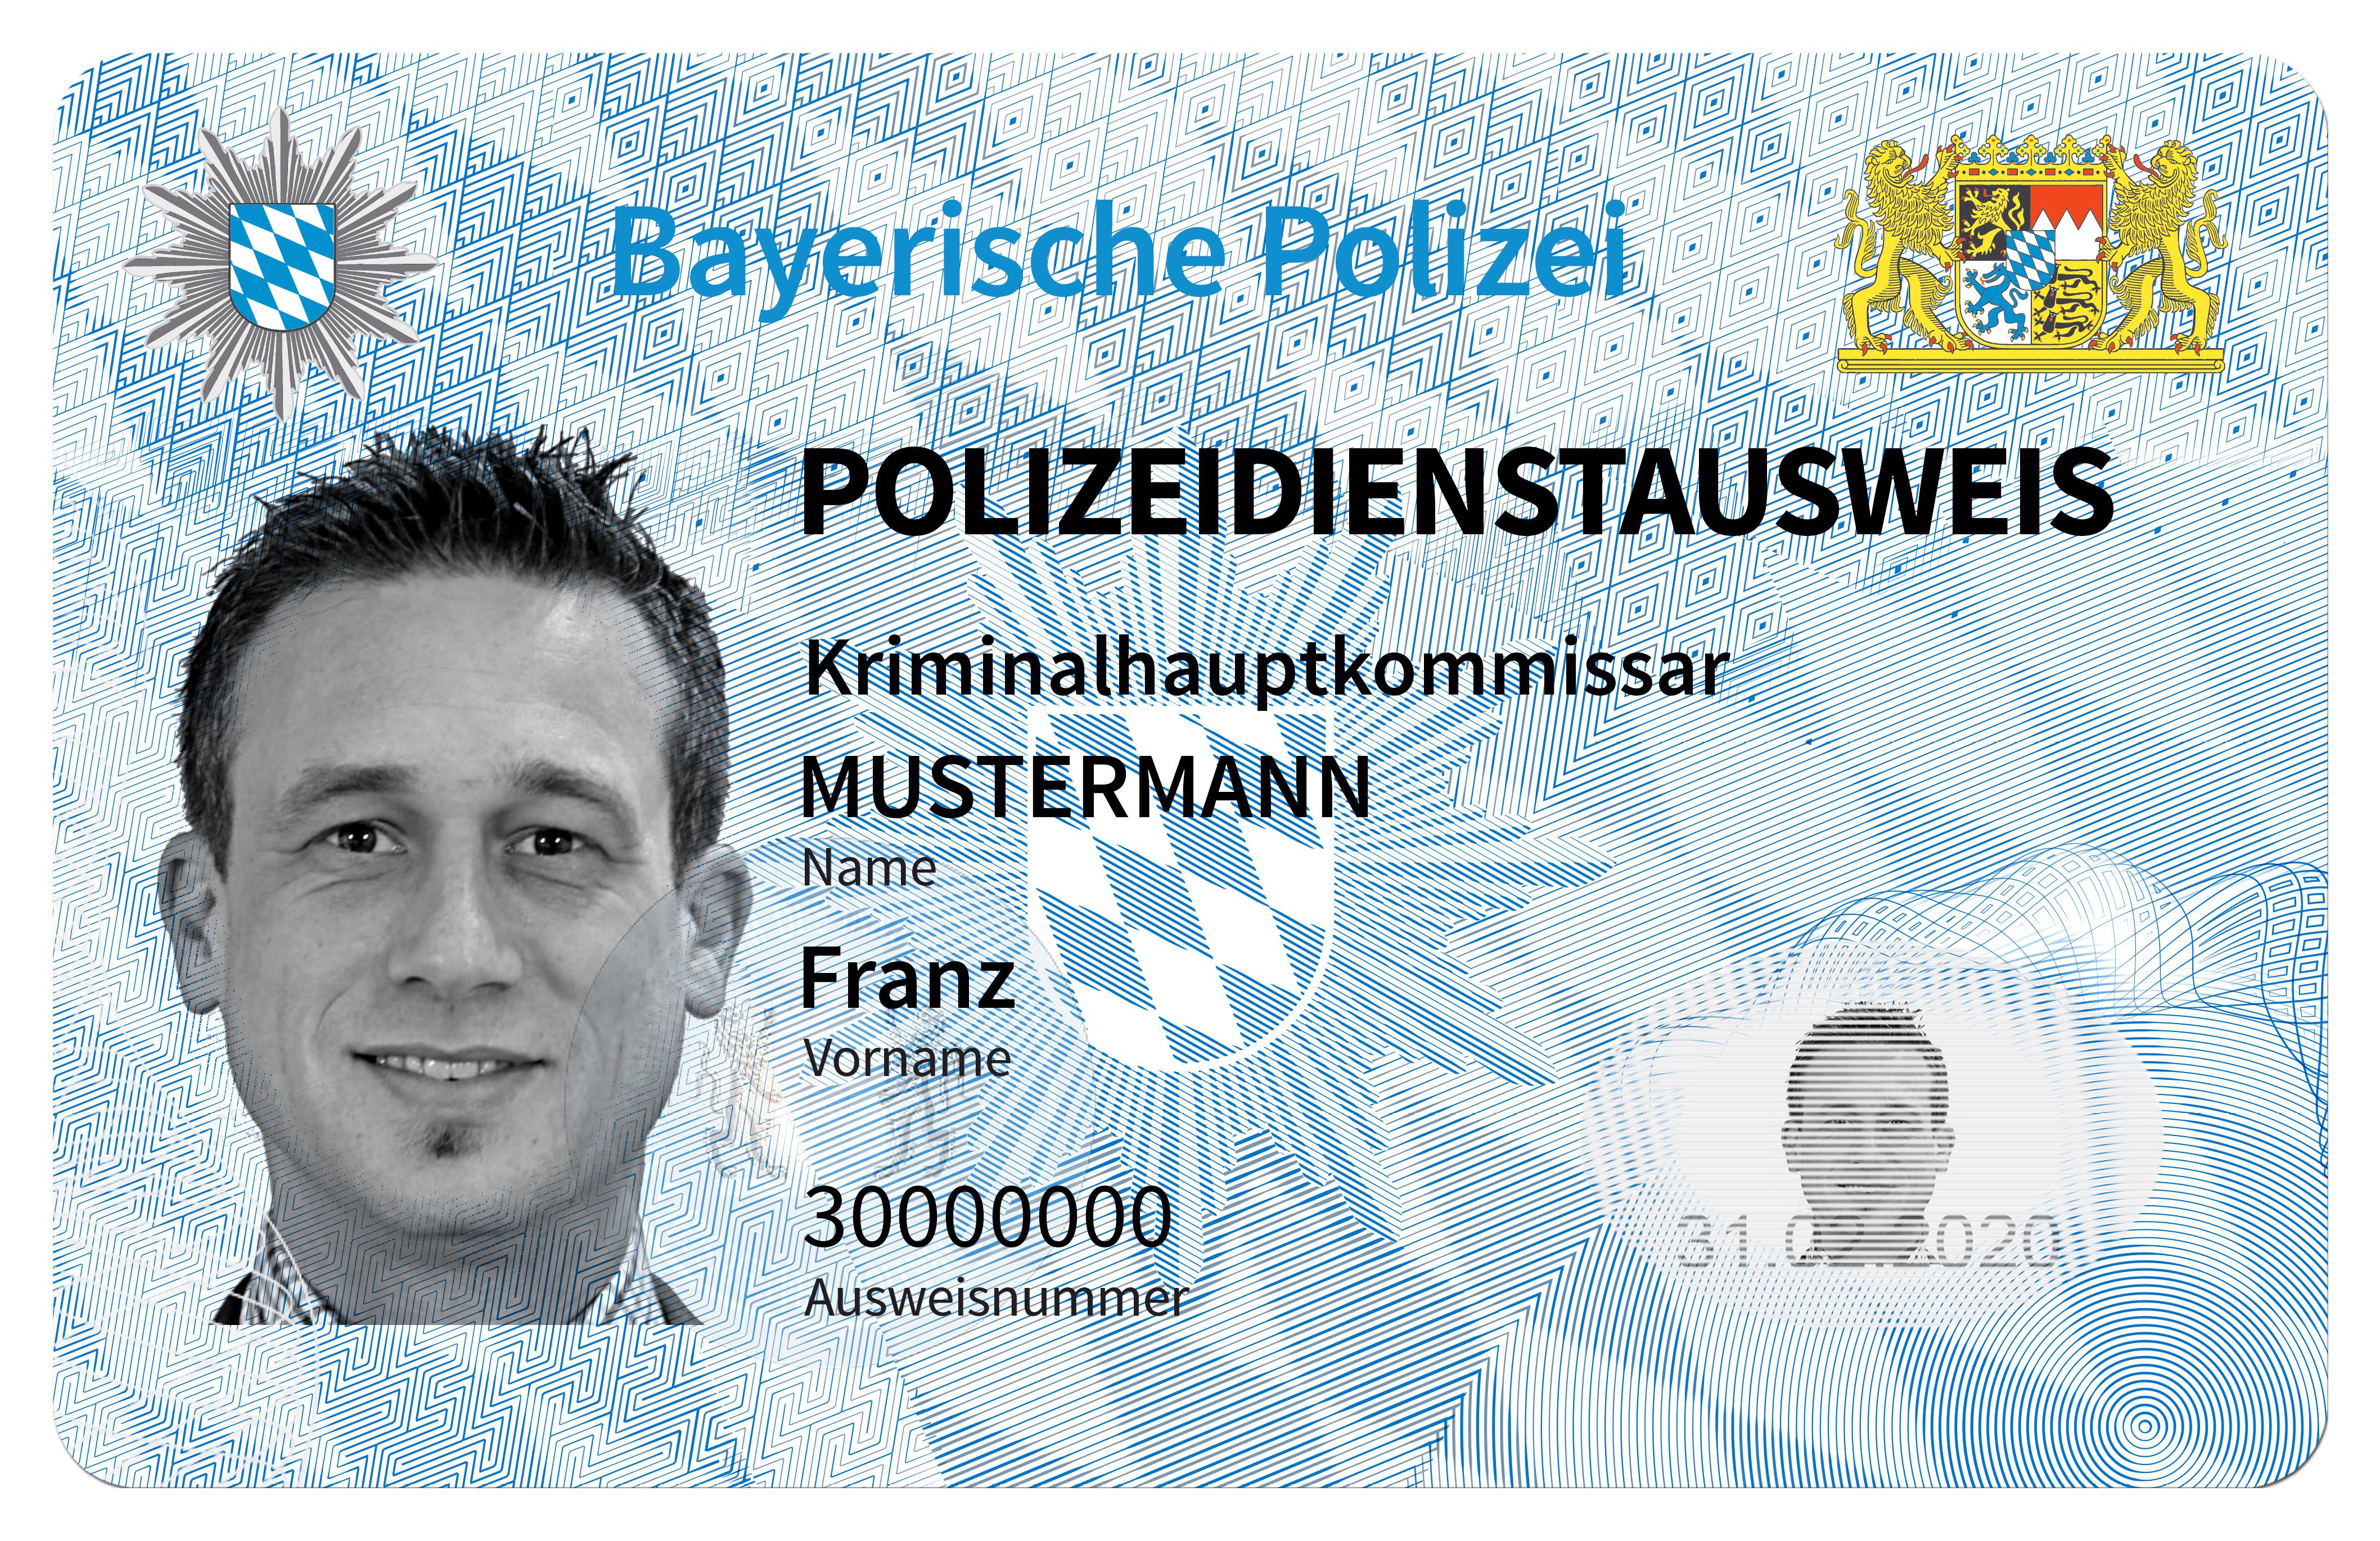 Landkreis Neu-Ulm: Neuer Polizei-Ausweis soll Betrügern das Leben